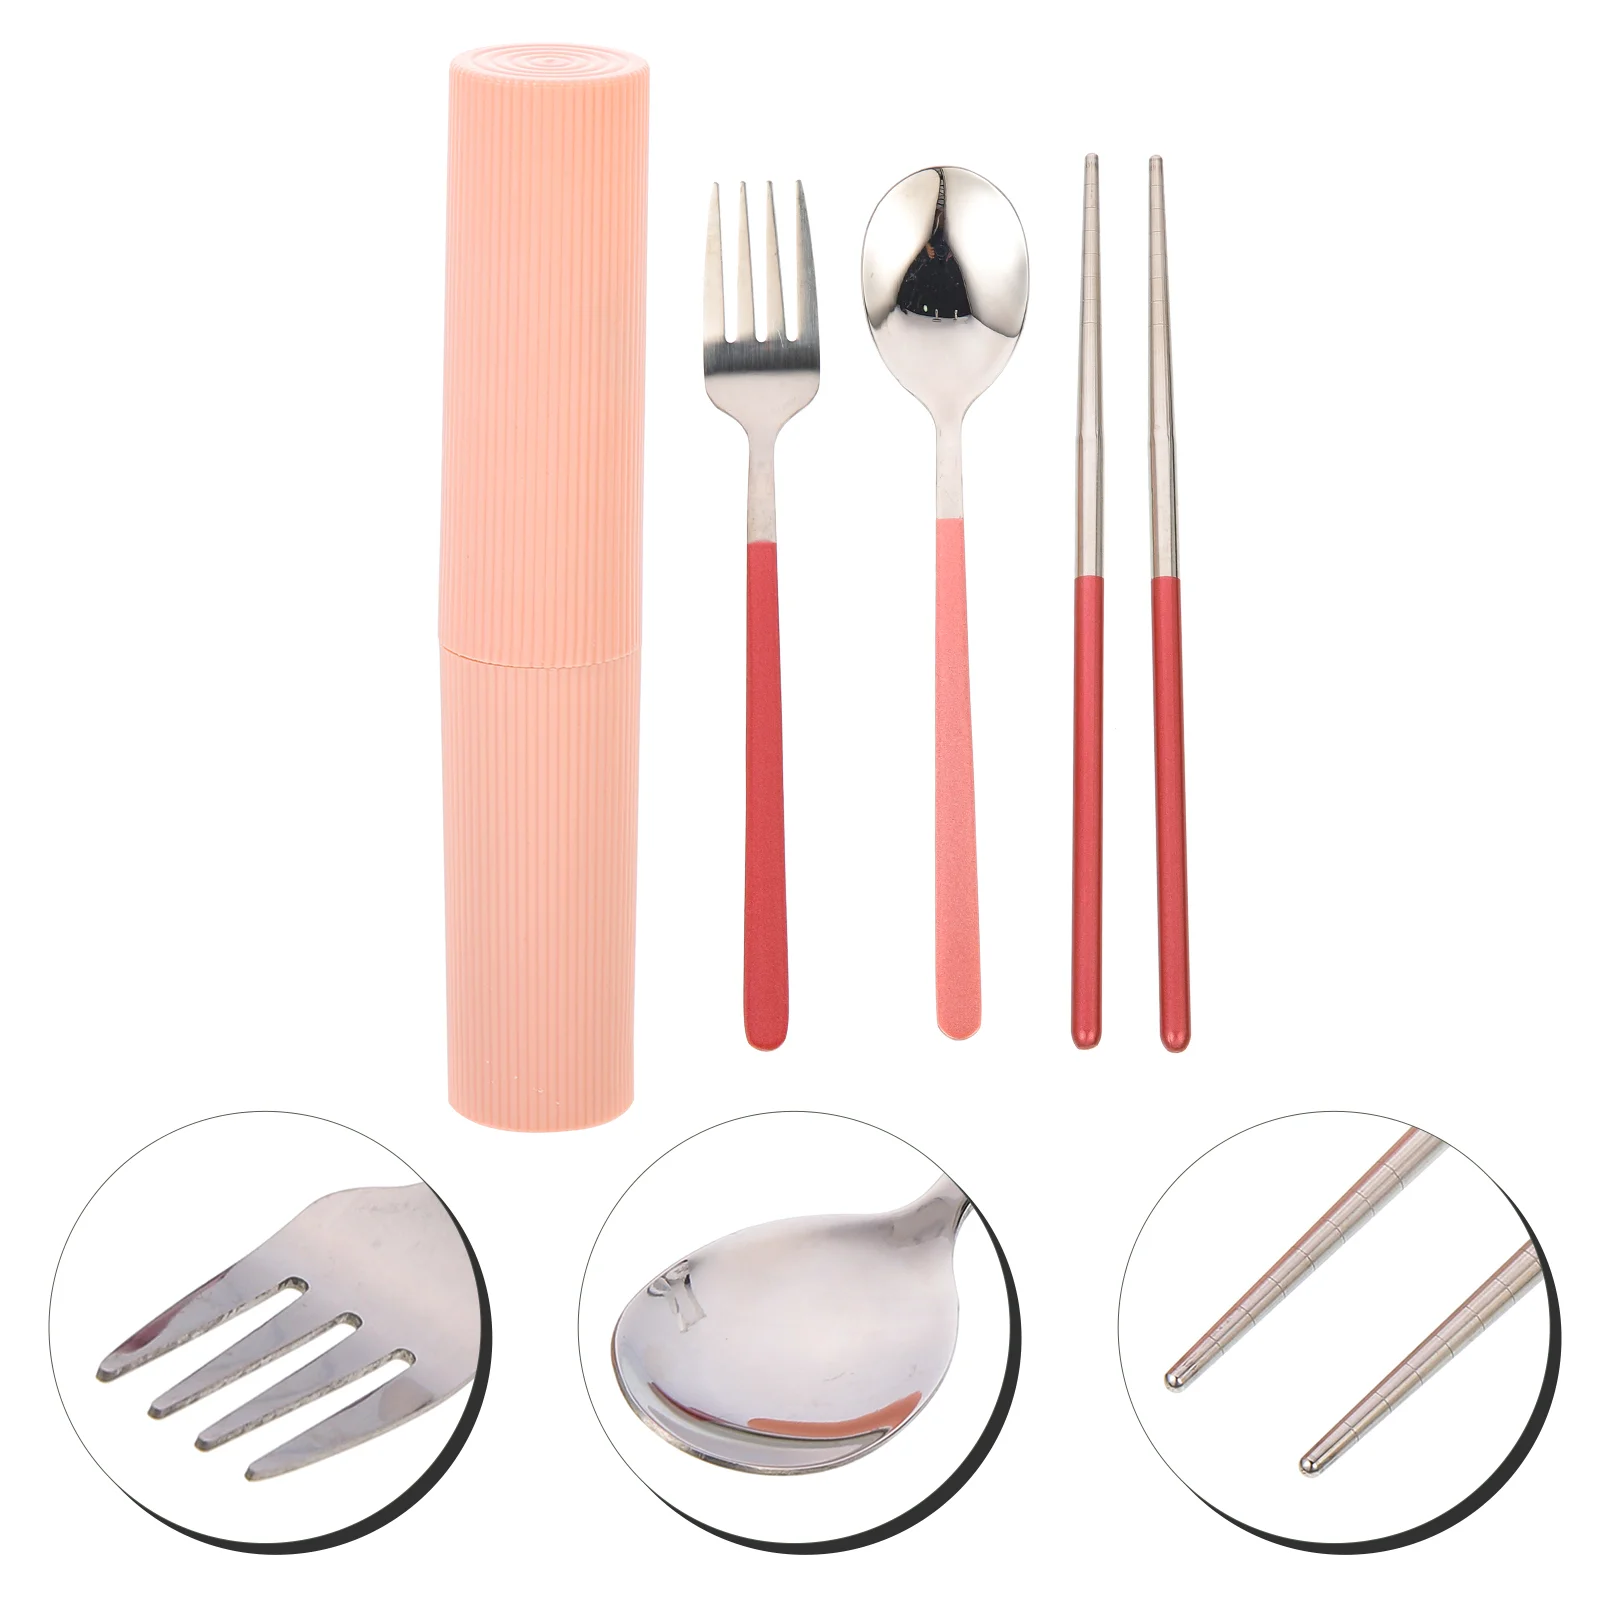 

Travel Case Camping Silverwarestorage Cutlery Stainless Chopsticks Must Organizer Reusable Flatware Fork Spoon Box Set Workplace